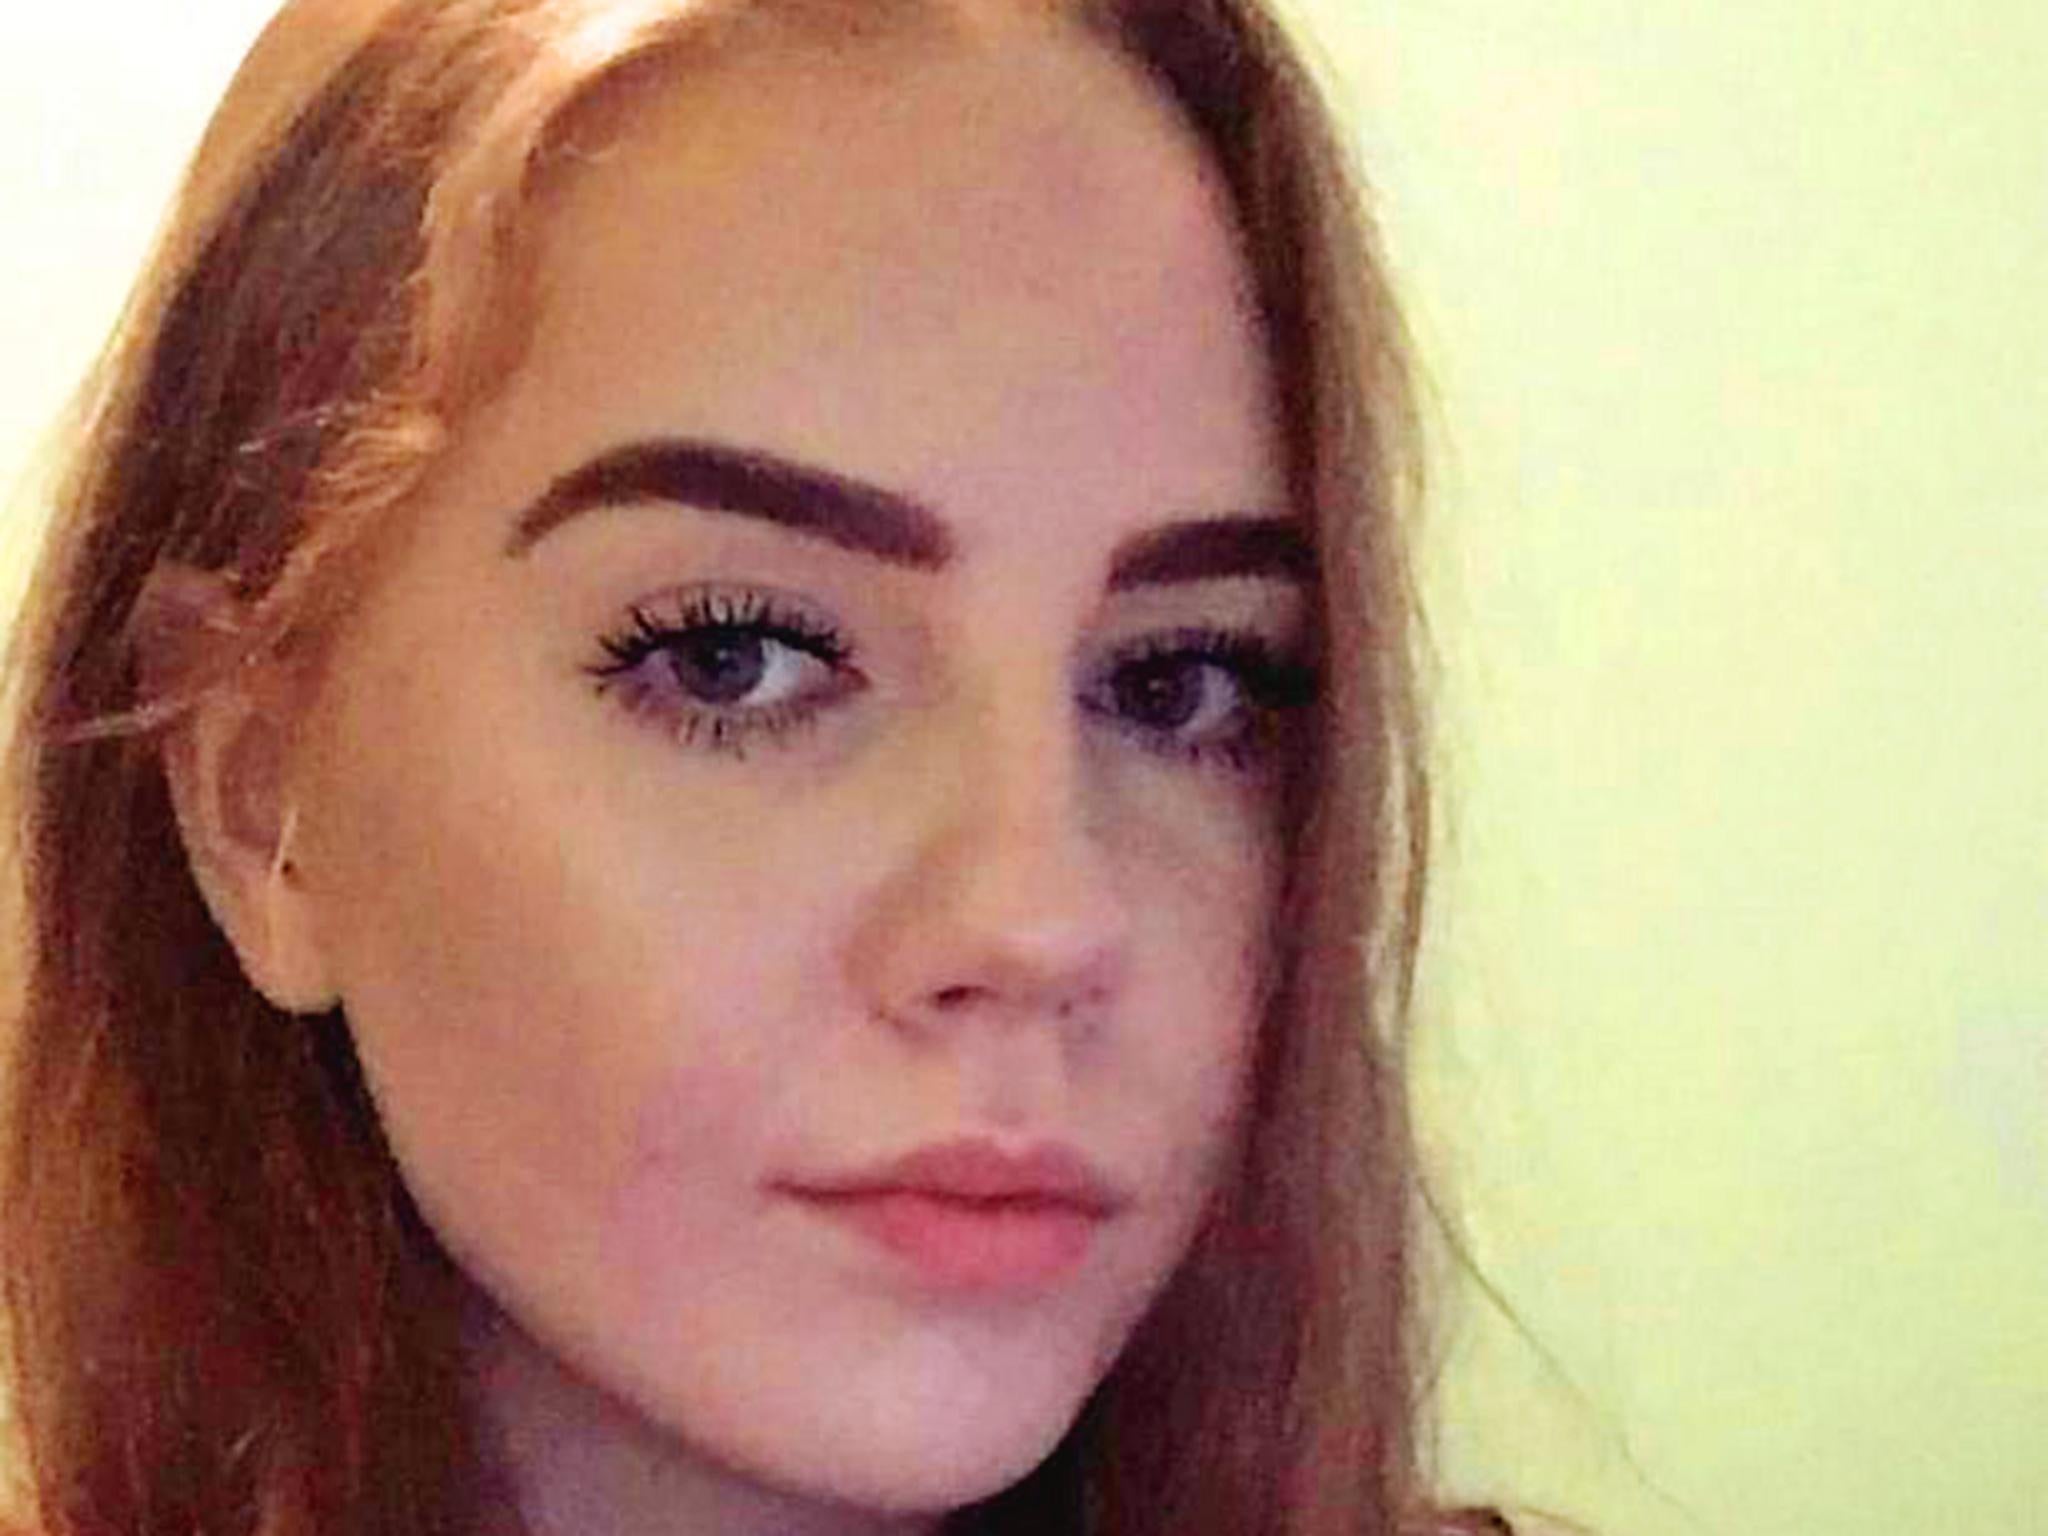 The body of Birna Brjansdottir was found eight days after she went missing